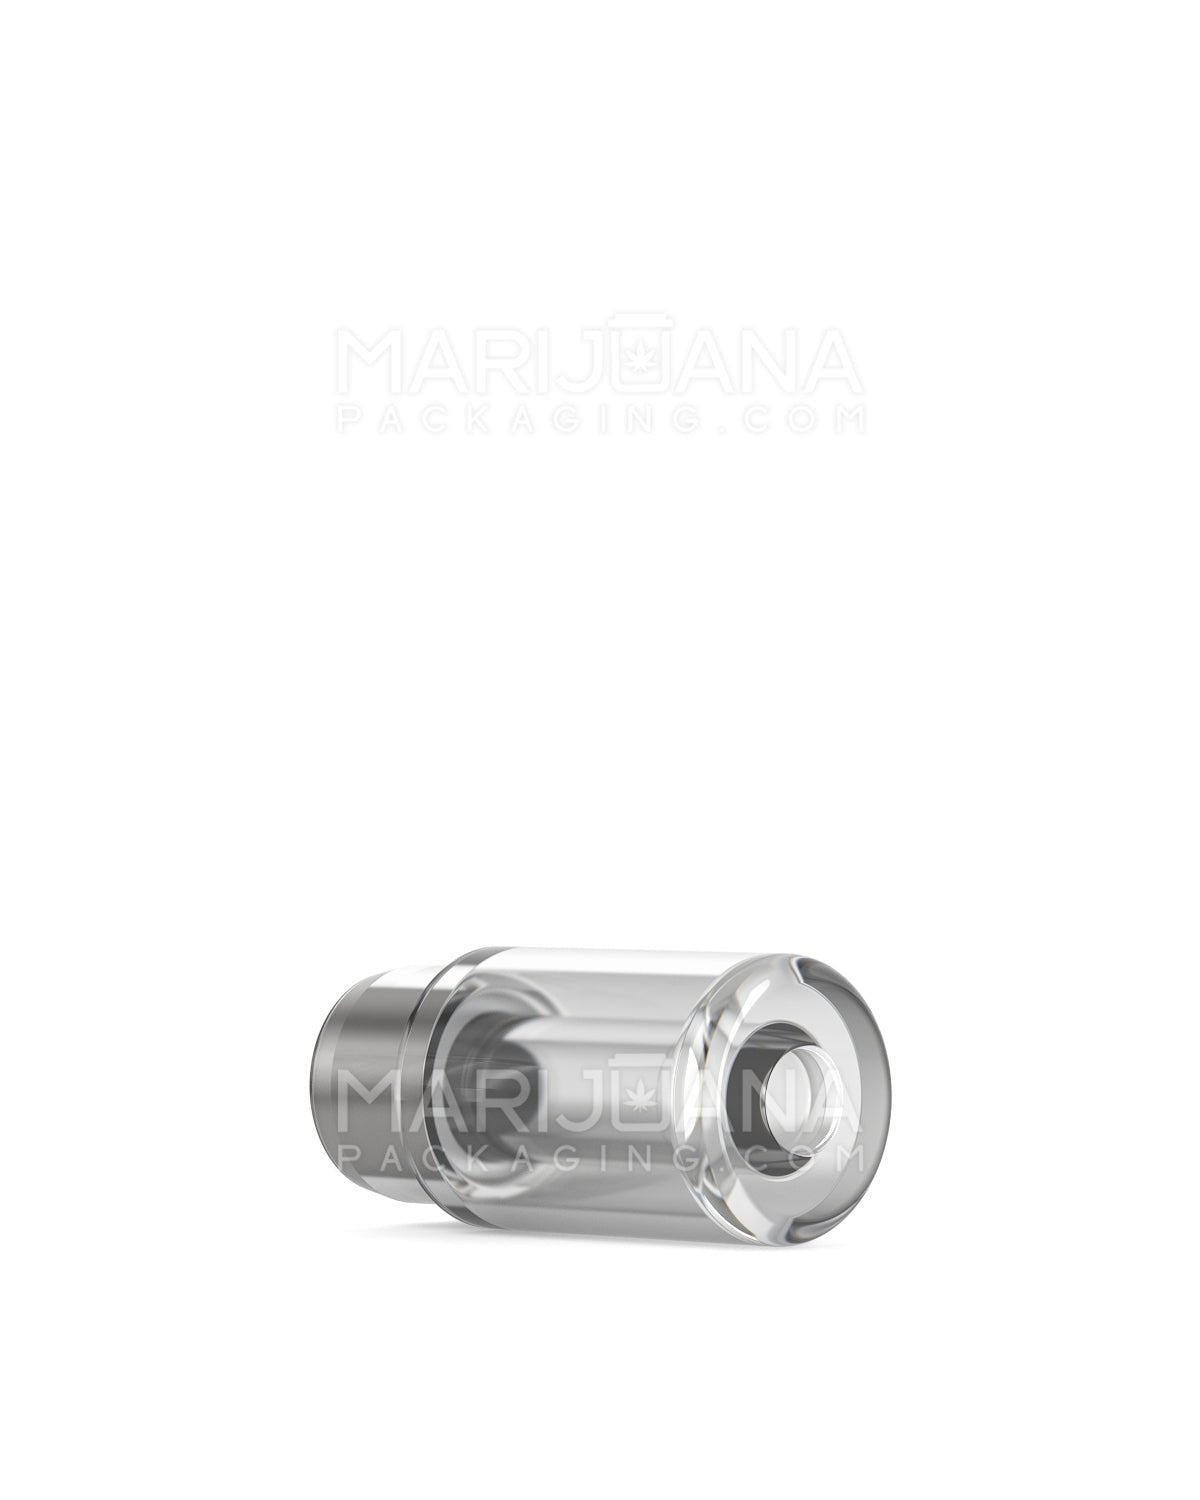 AVD | Barrel Vape Mouthpiece for GoodCarts Plastic Cartridges | Clear Plastic - Eazy Press - 600 Count - 5